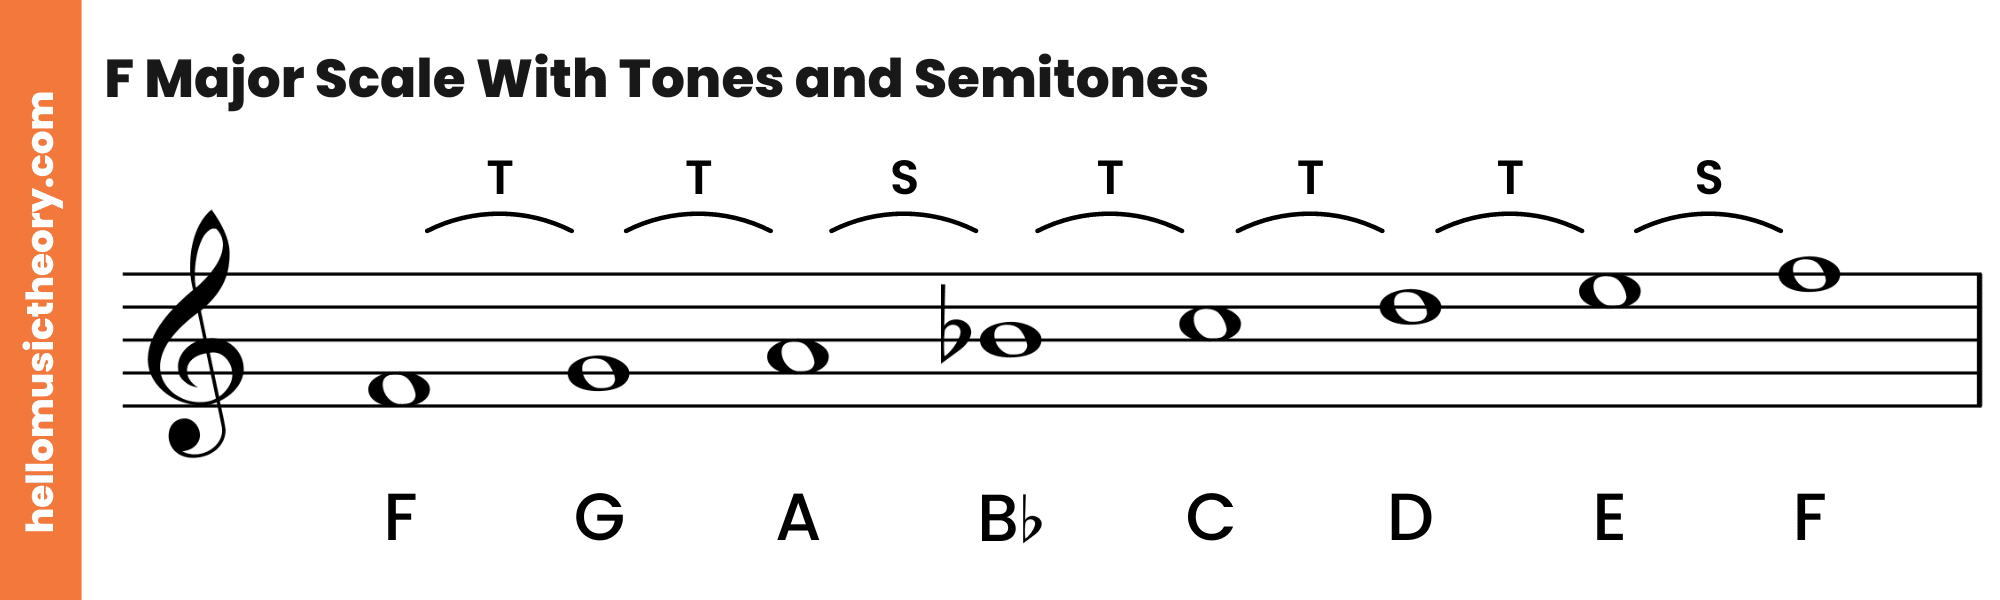 F Major Scale Treble Clef With Tones and Semitones